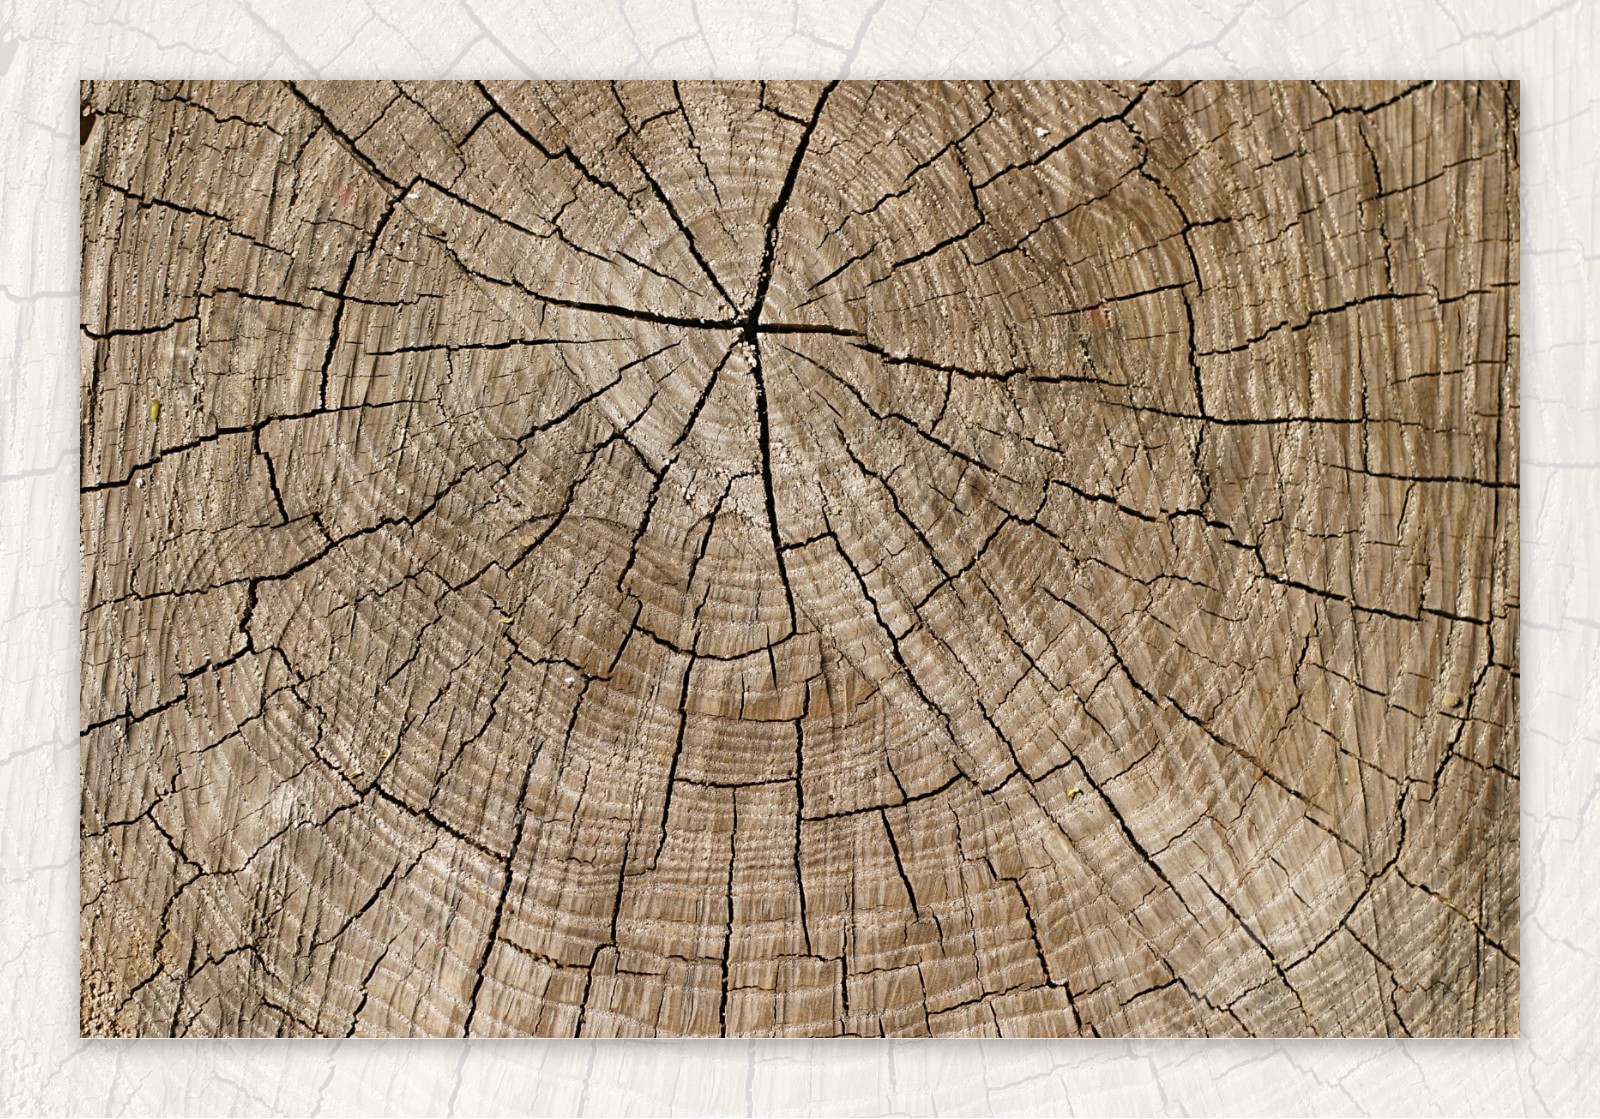 圆形木头裂纹图片